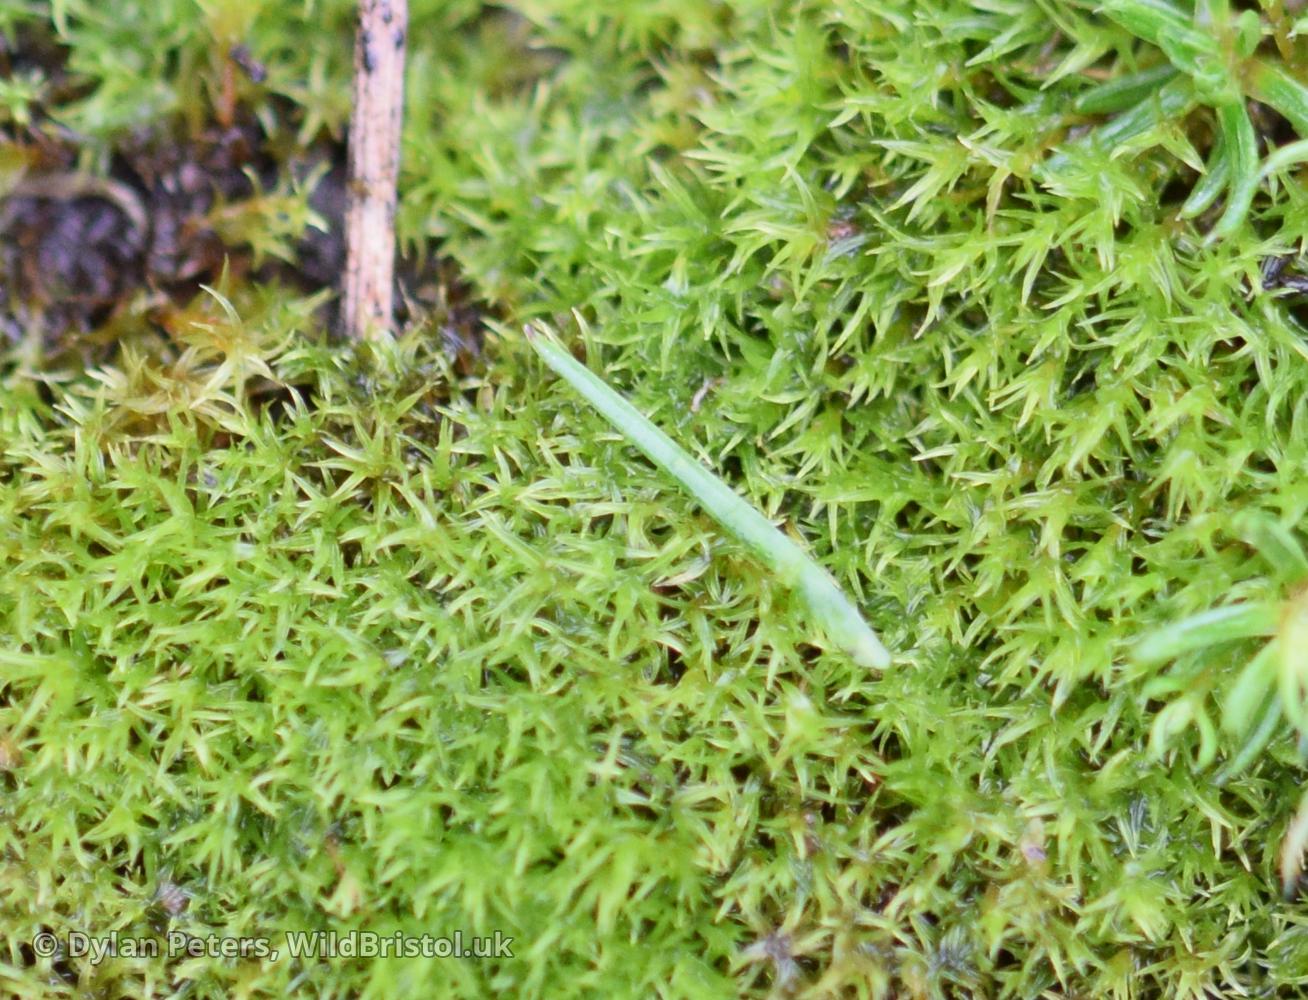 Redshank Moss (Ceratodon purpureus) Species WildBristol.uk